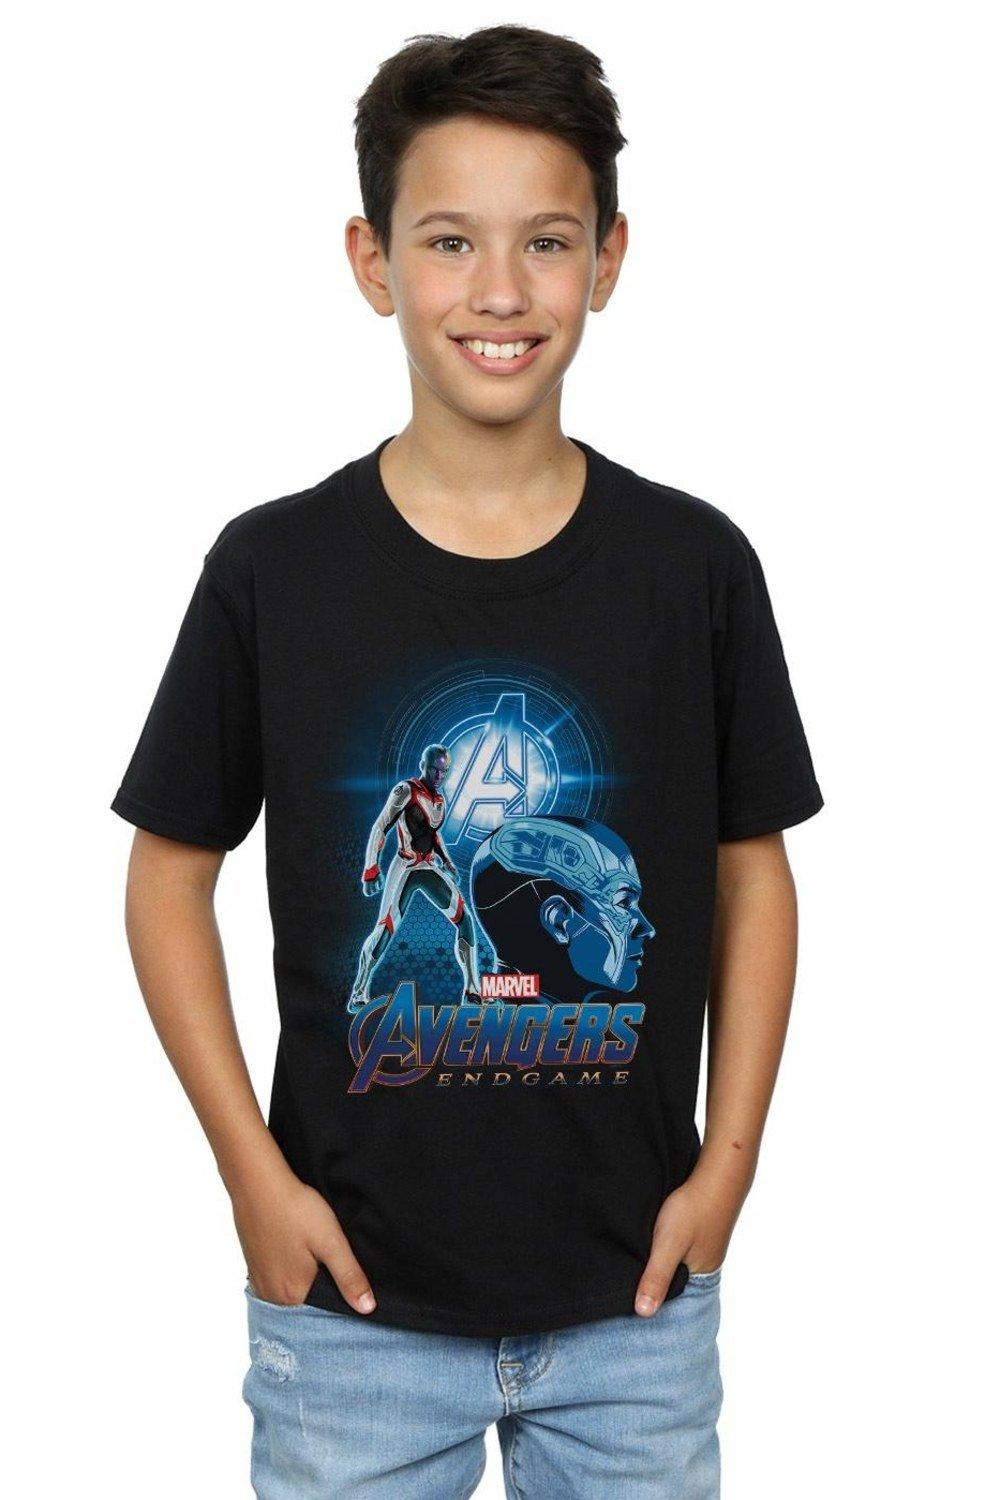 Avengers Endgame Nebula Team Suit T-Shirt